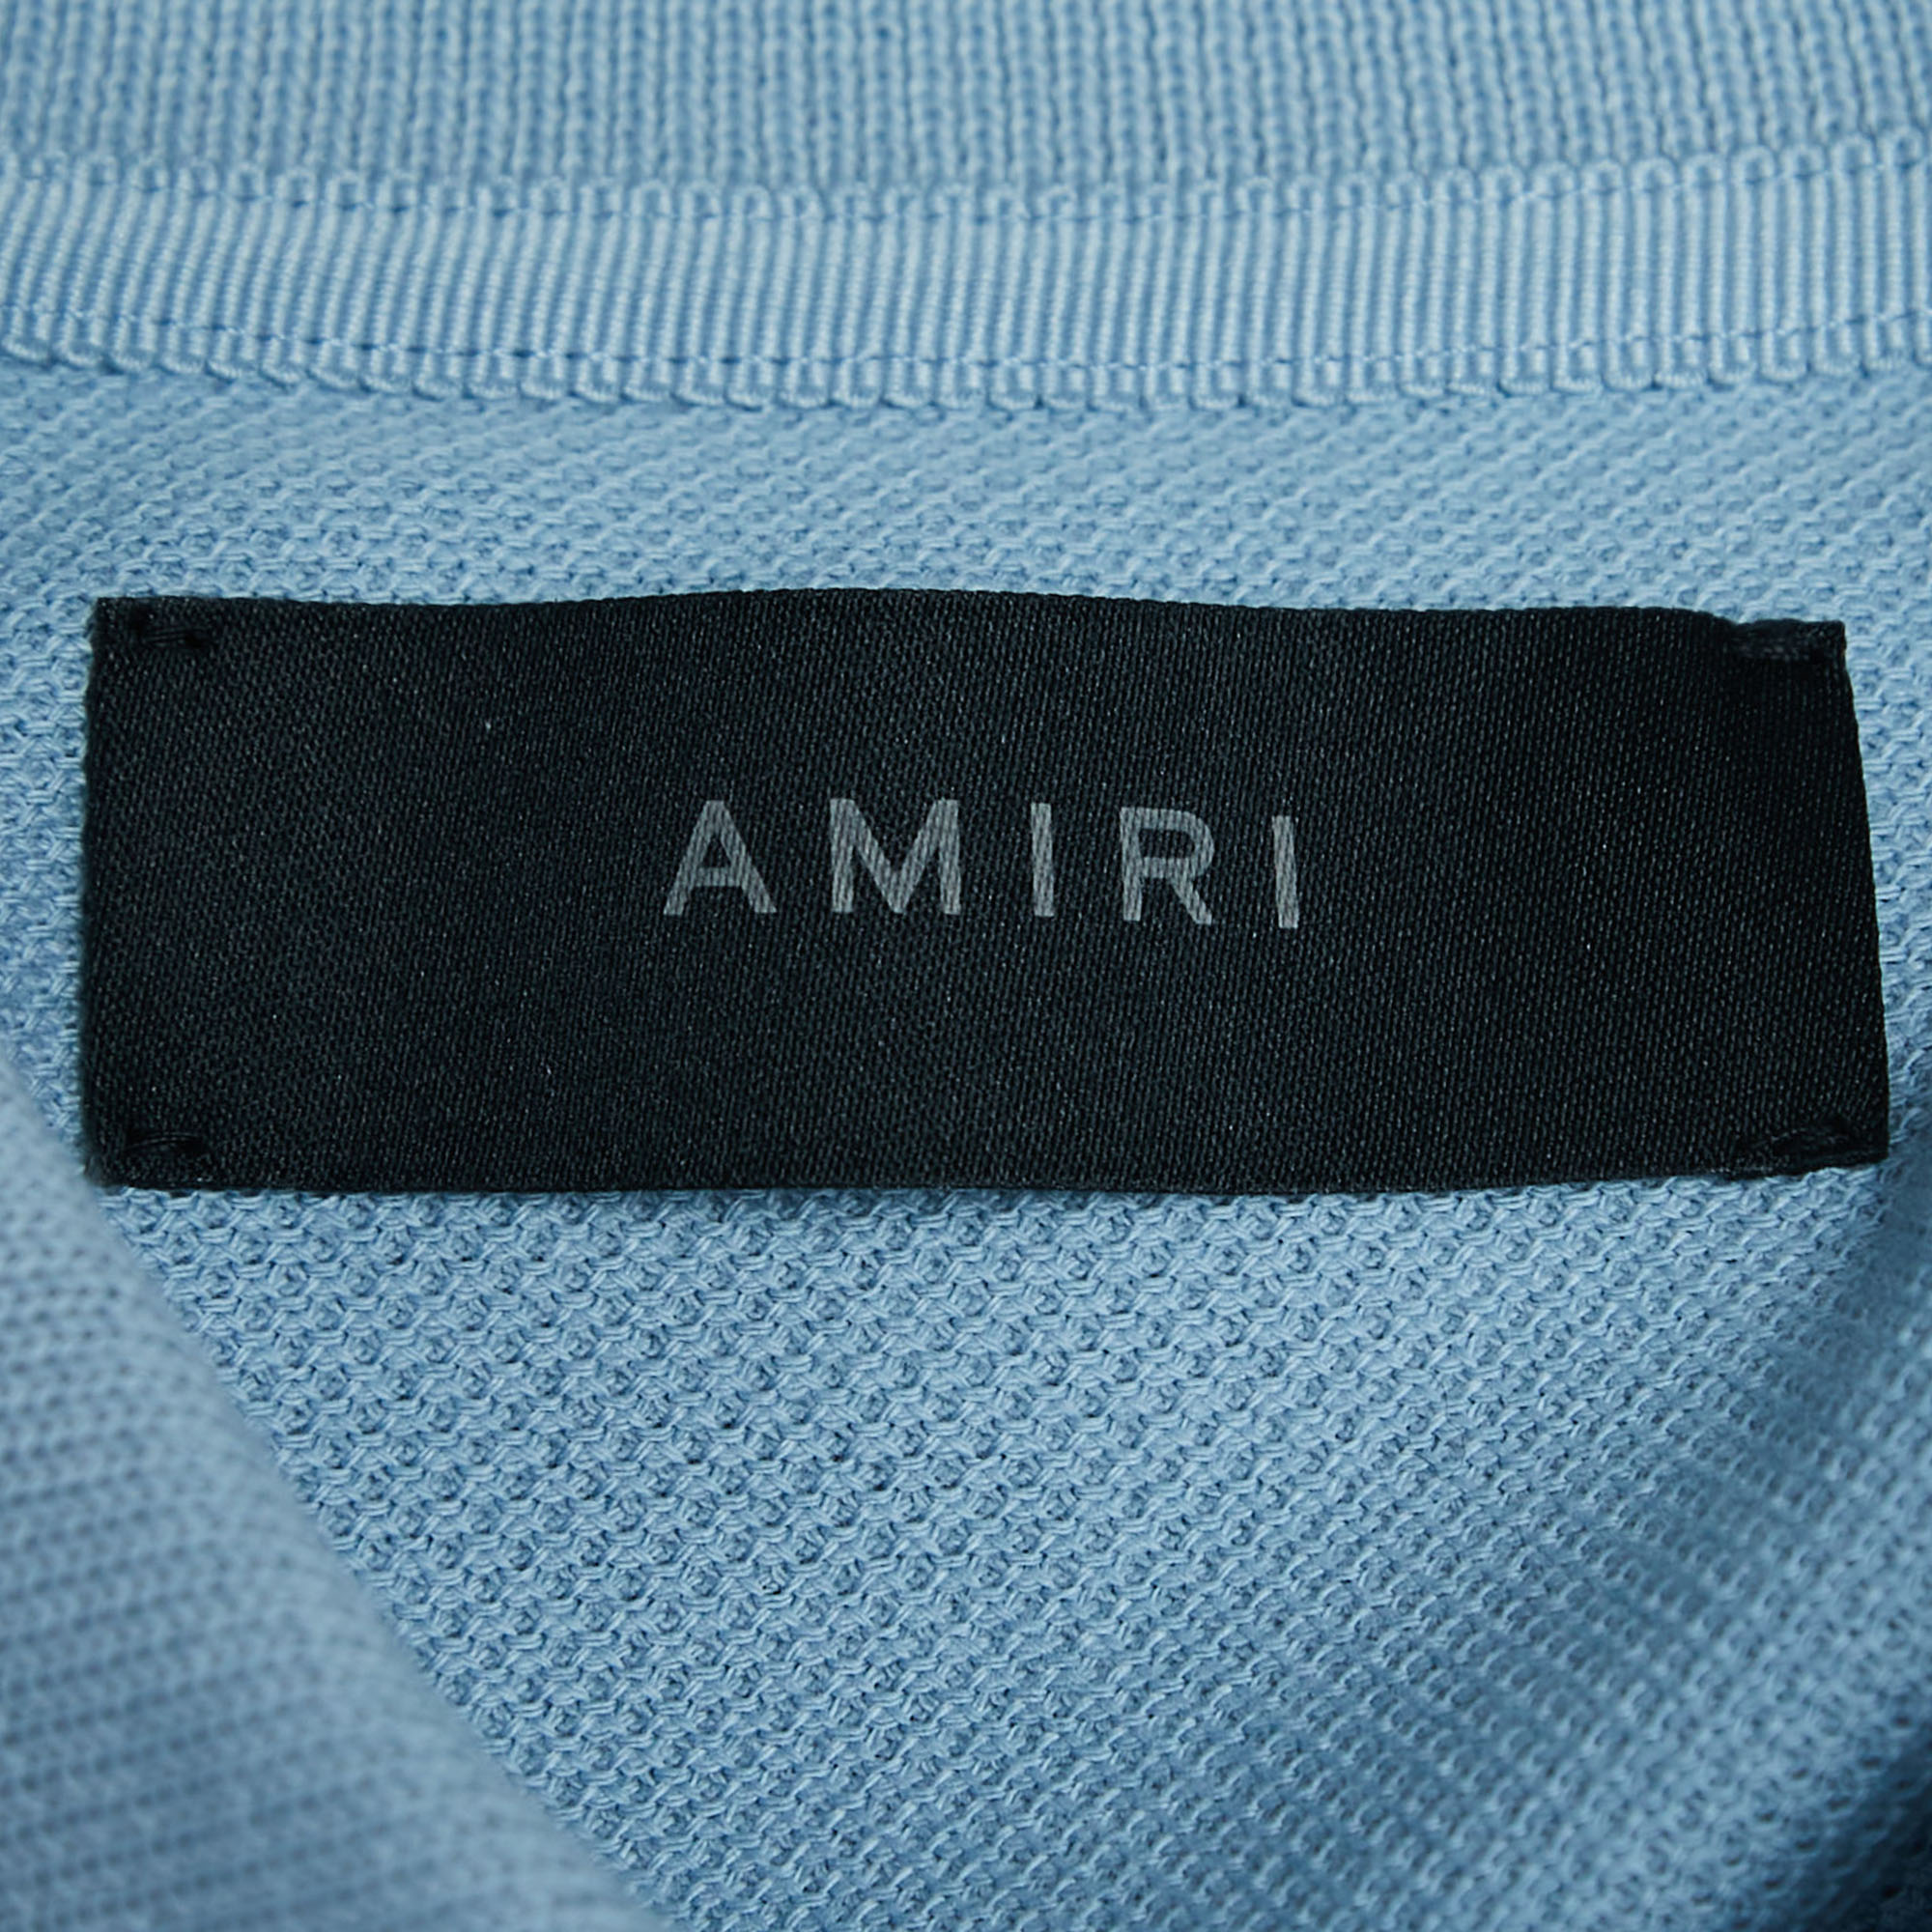 Amiri Blue Cotton Pique Logo Polo T-Shirt S